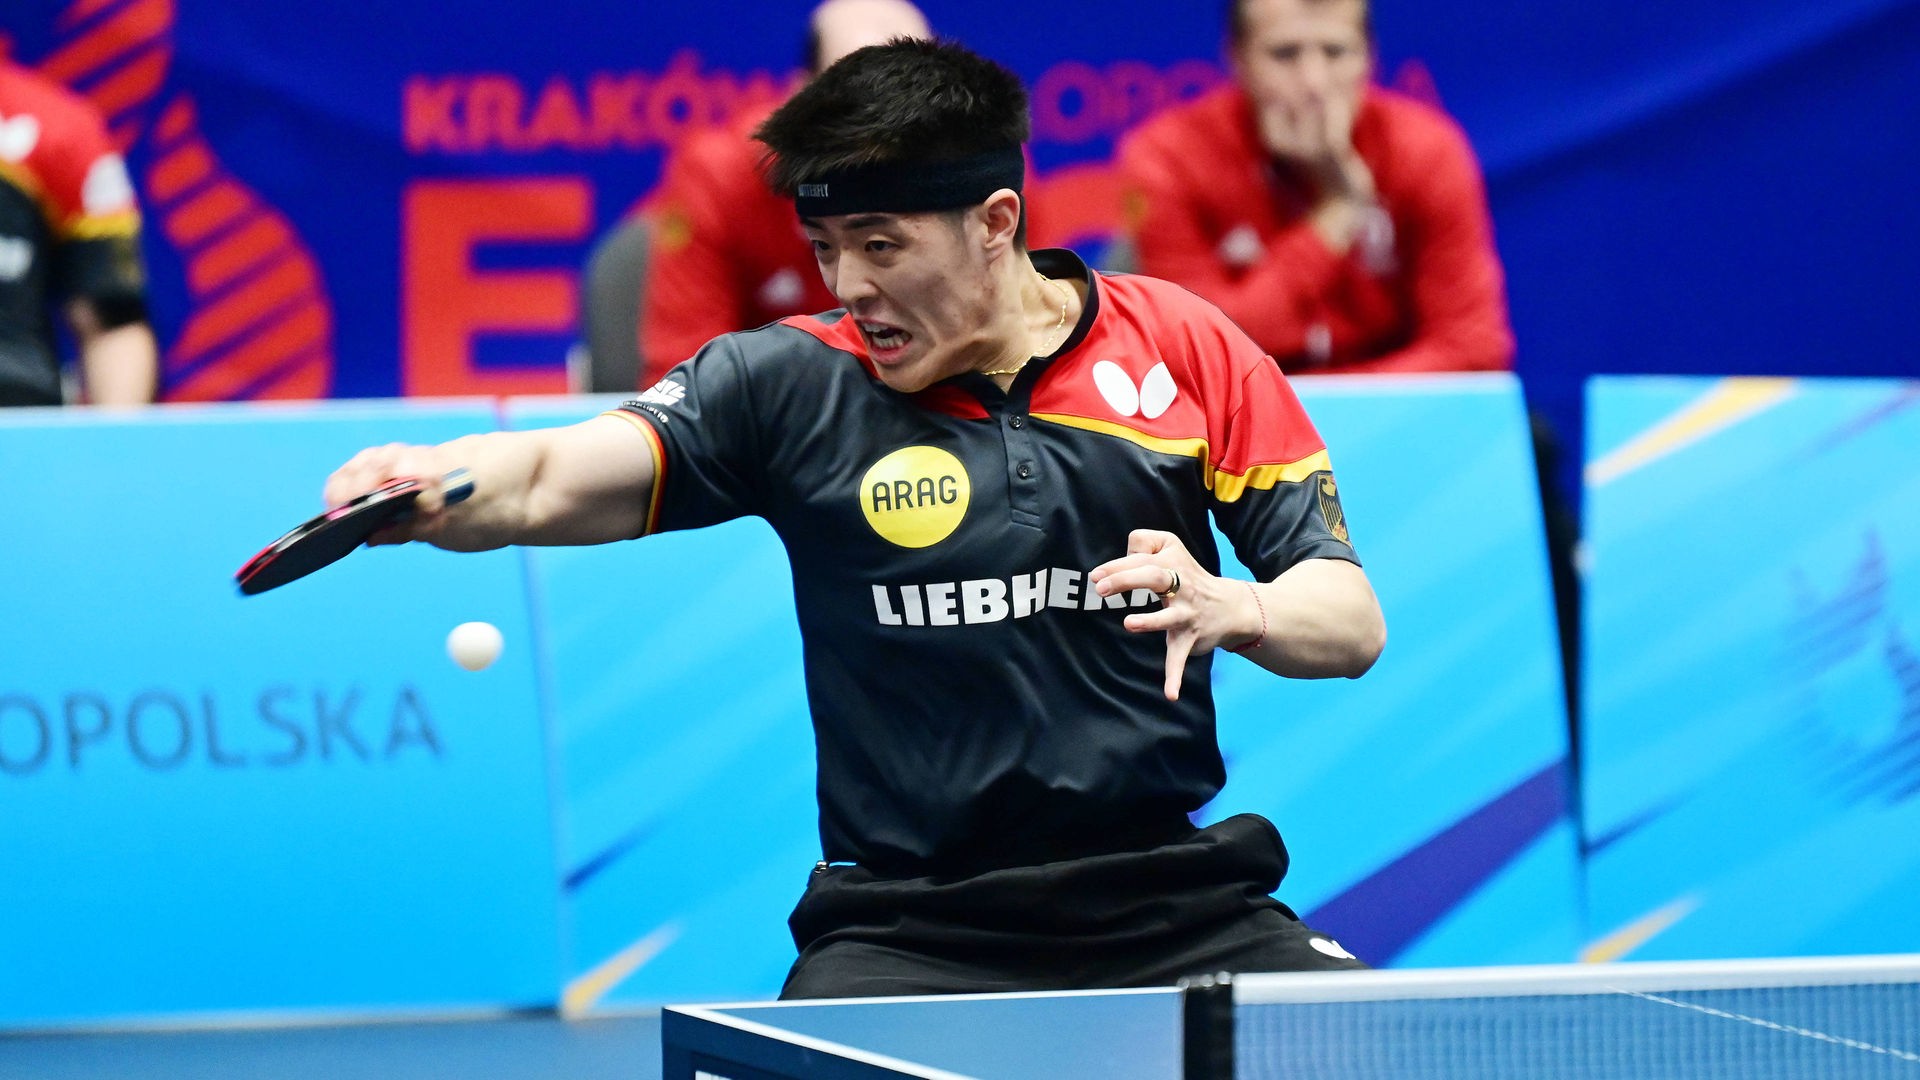 Tischtennis-Team um Qiu holt Gold bei Europaspielen - Tischtennis - Sport